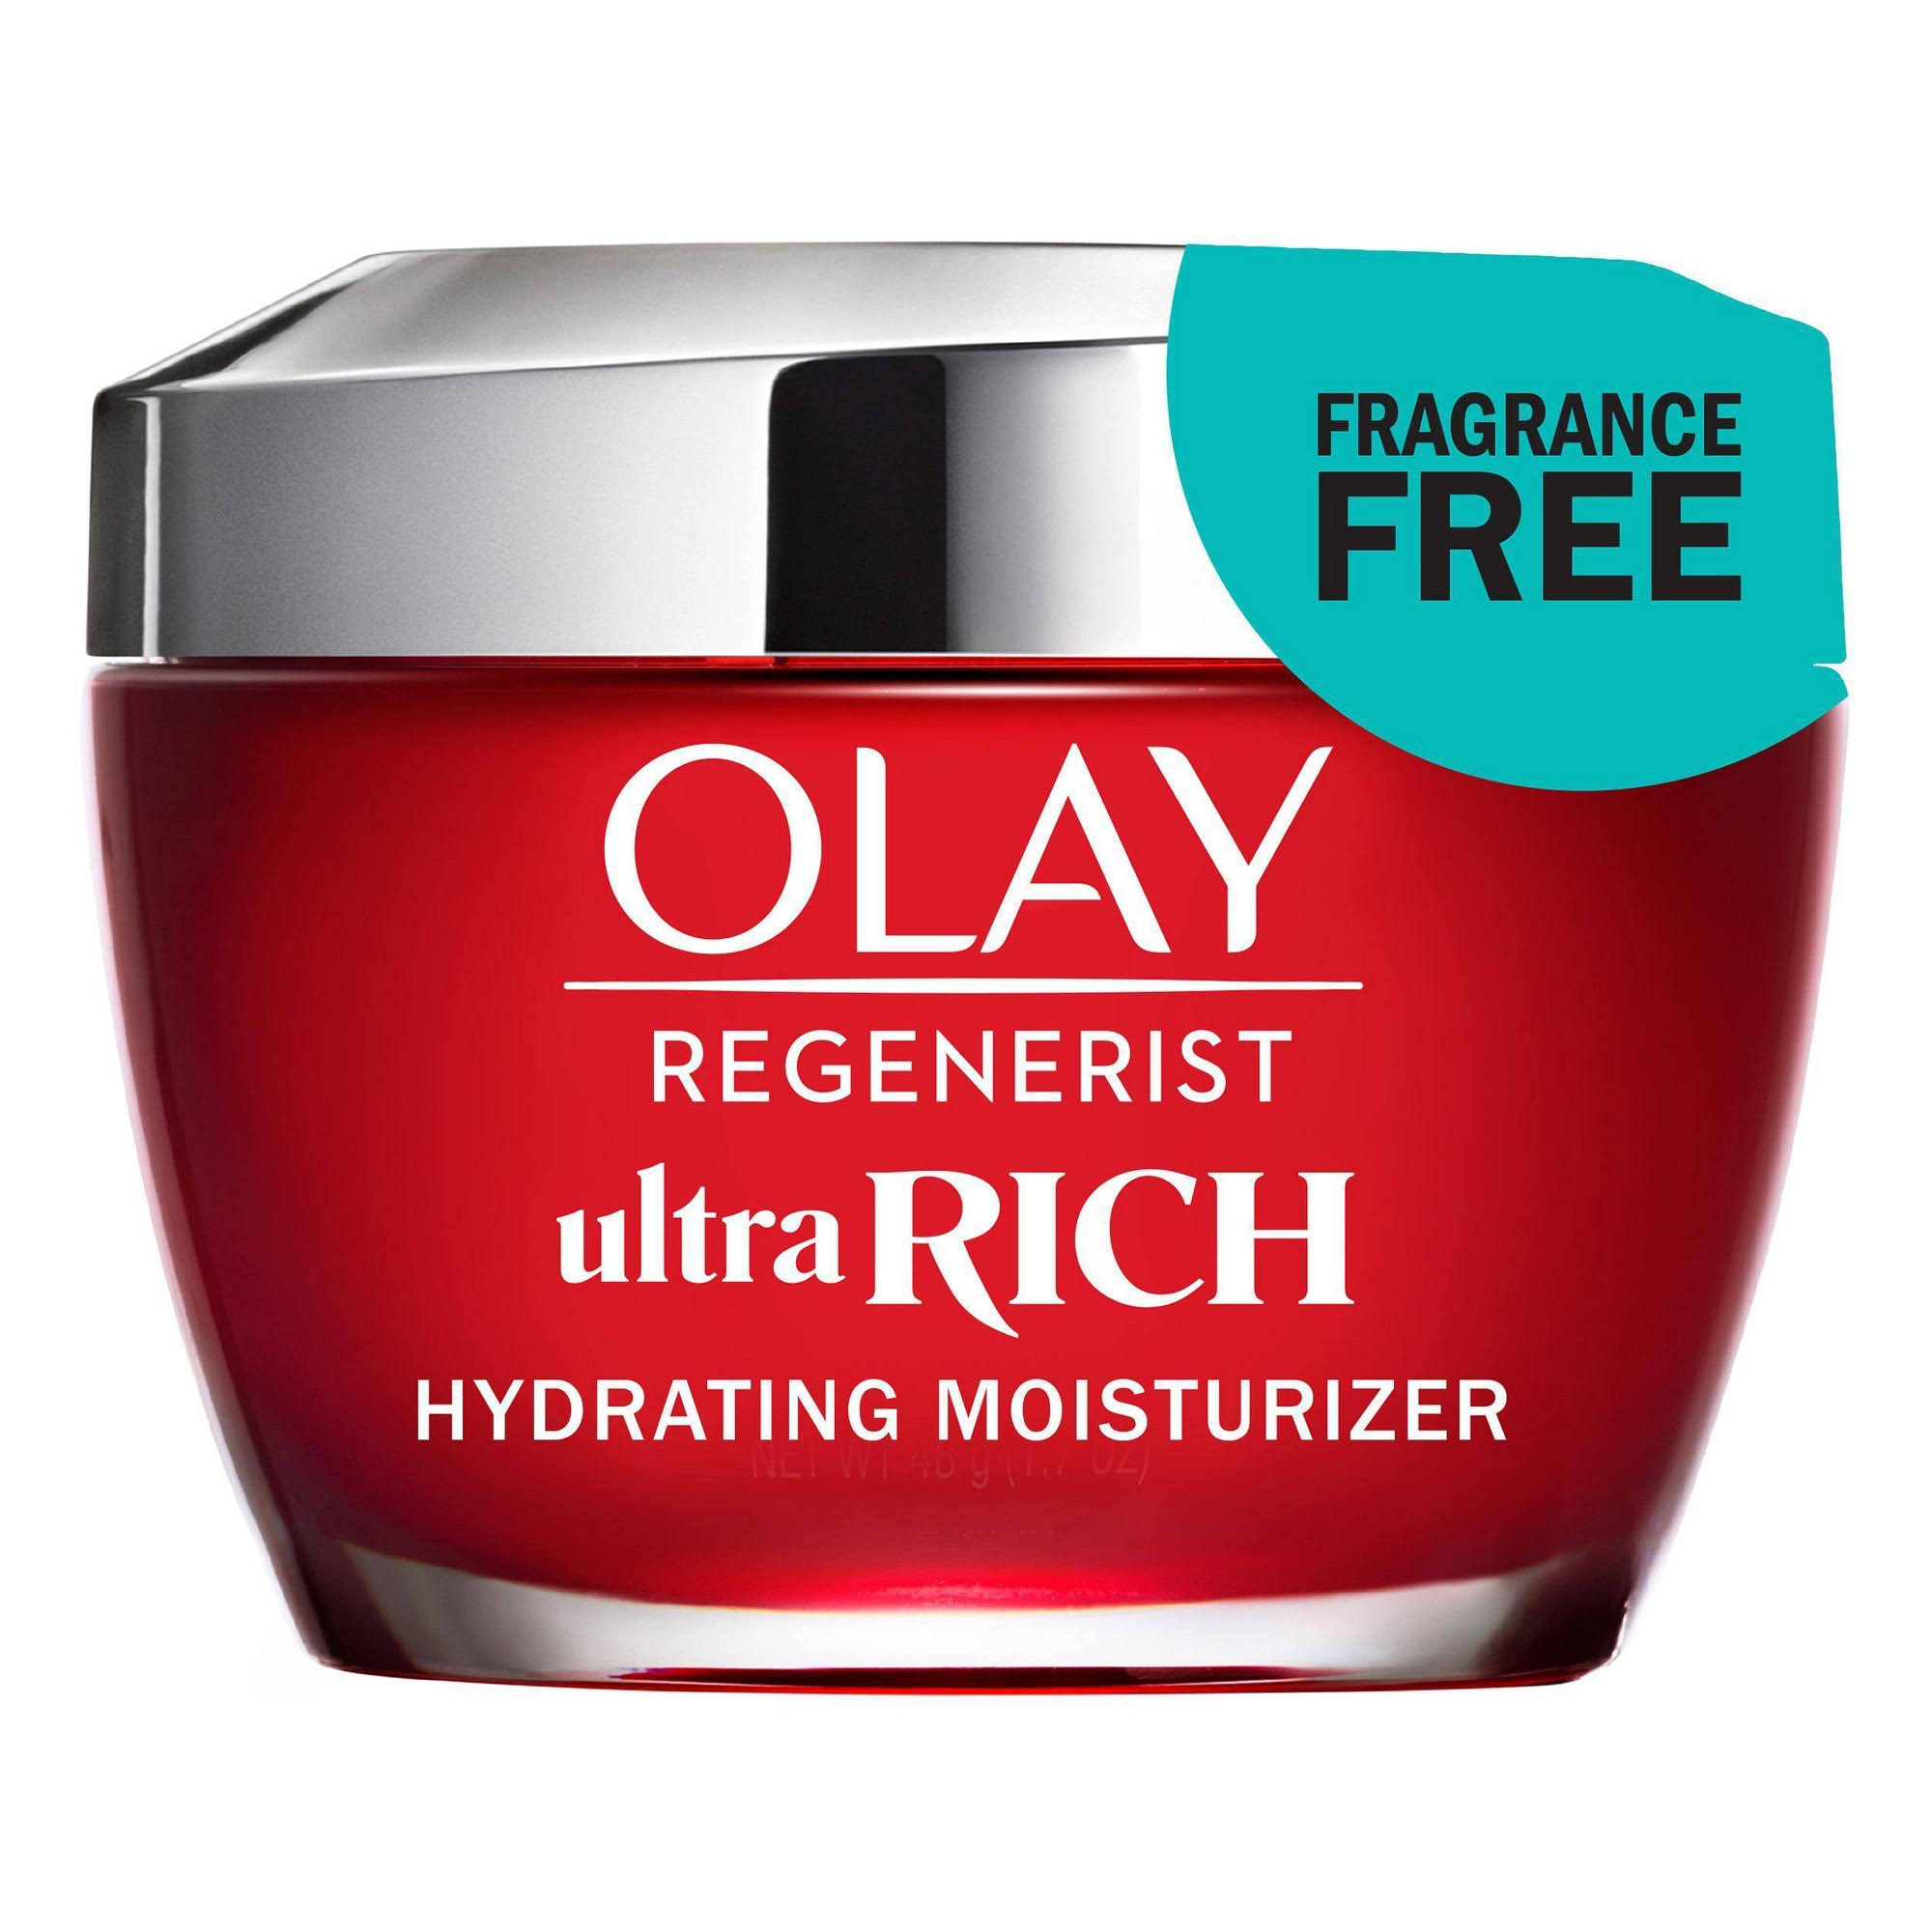 Olay Regenerist Ultra Rich Face Moisturizer, Fragrance-Free, 1.7 oz